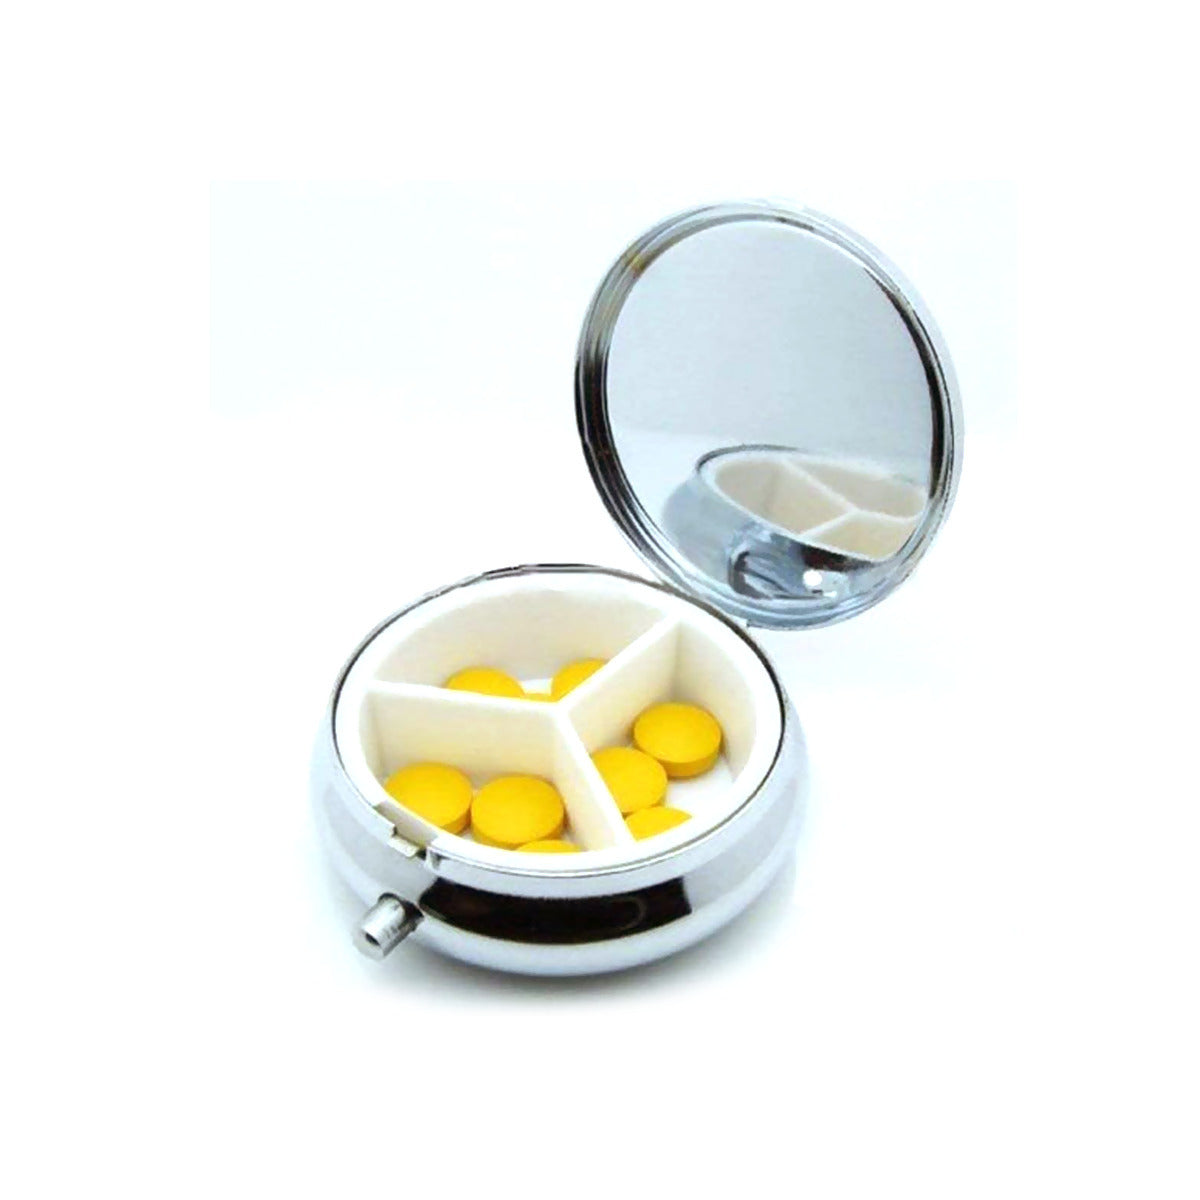 Pocket pill or snuff box